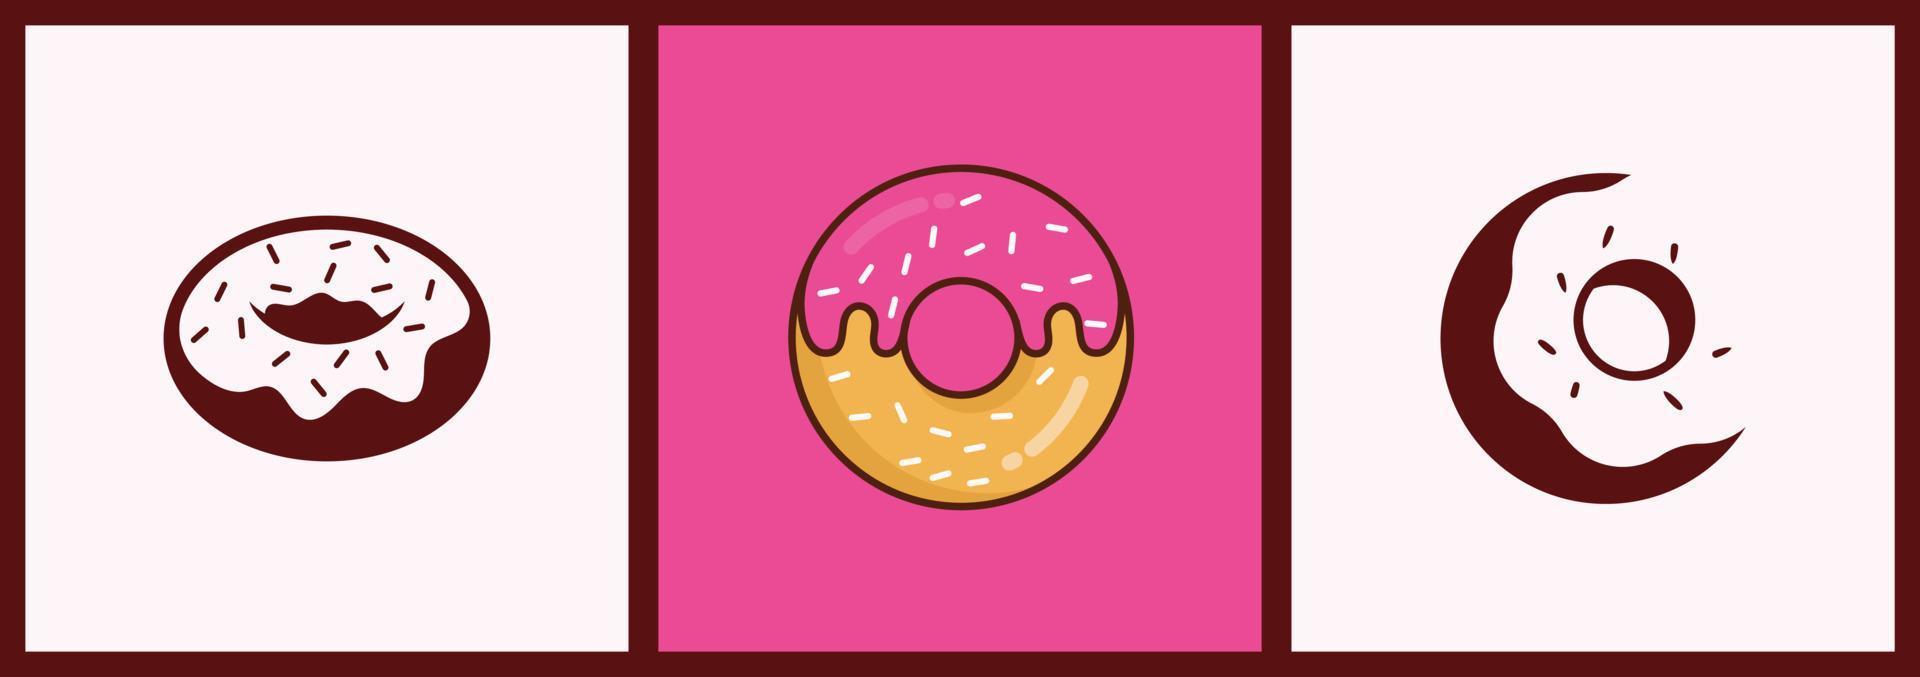 cute donut illustration logo design template collection vector